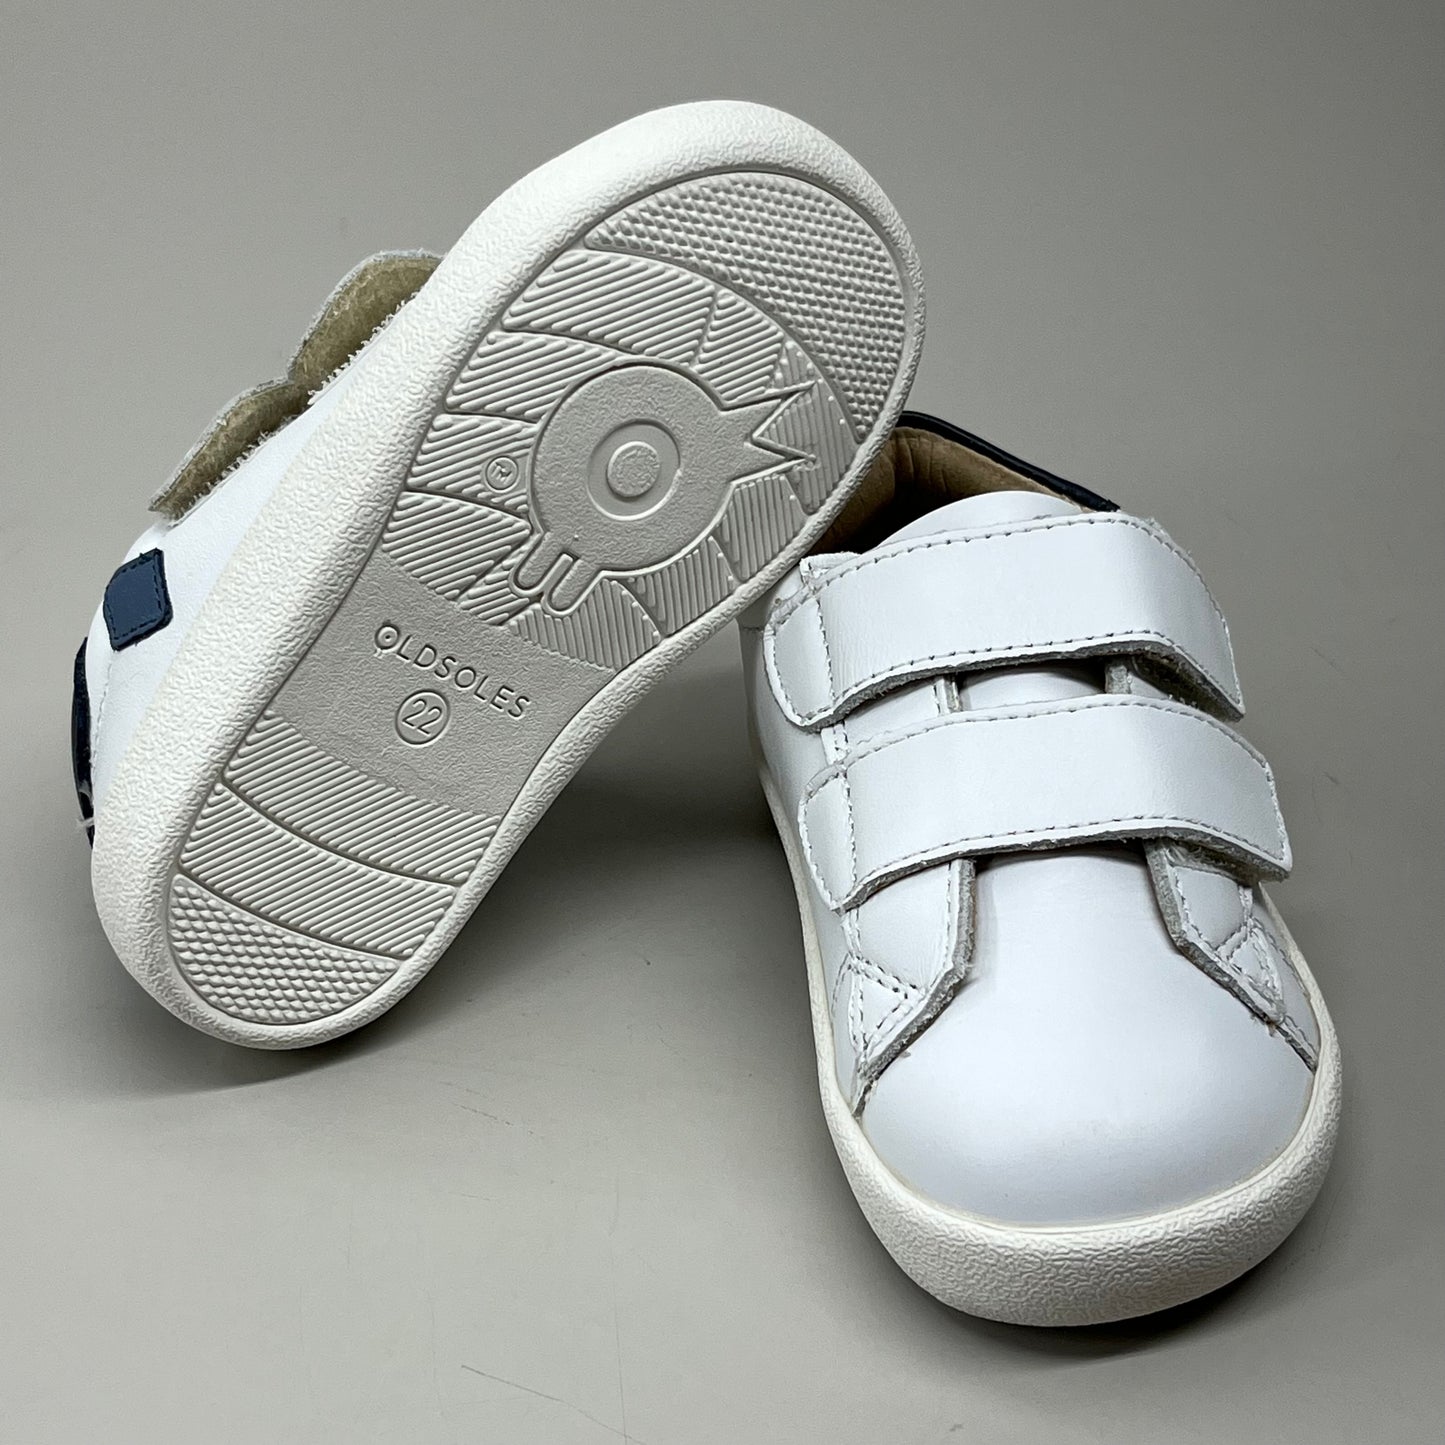 OLD SOLES Fullhouse Boys & Girls Leather Shoes Kid's Sz 5 EU 21 Snow / Indigo / Navy #5082